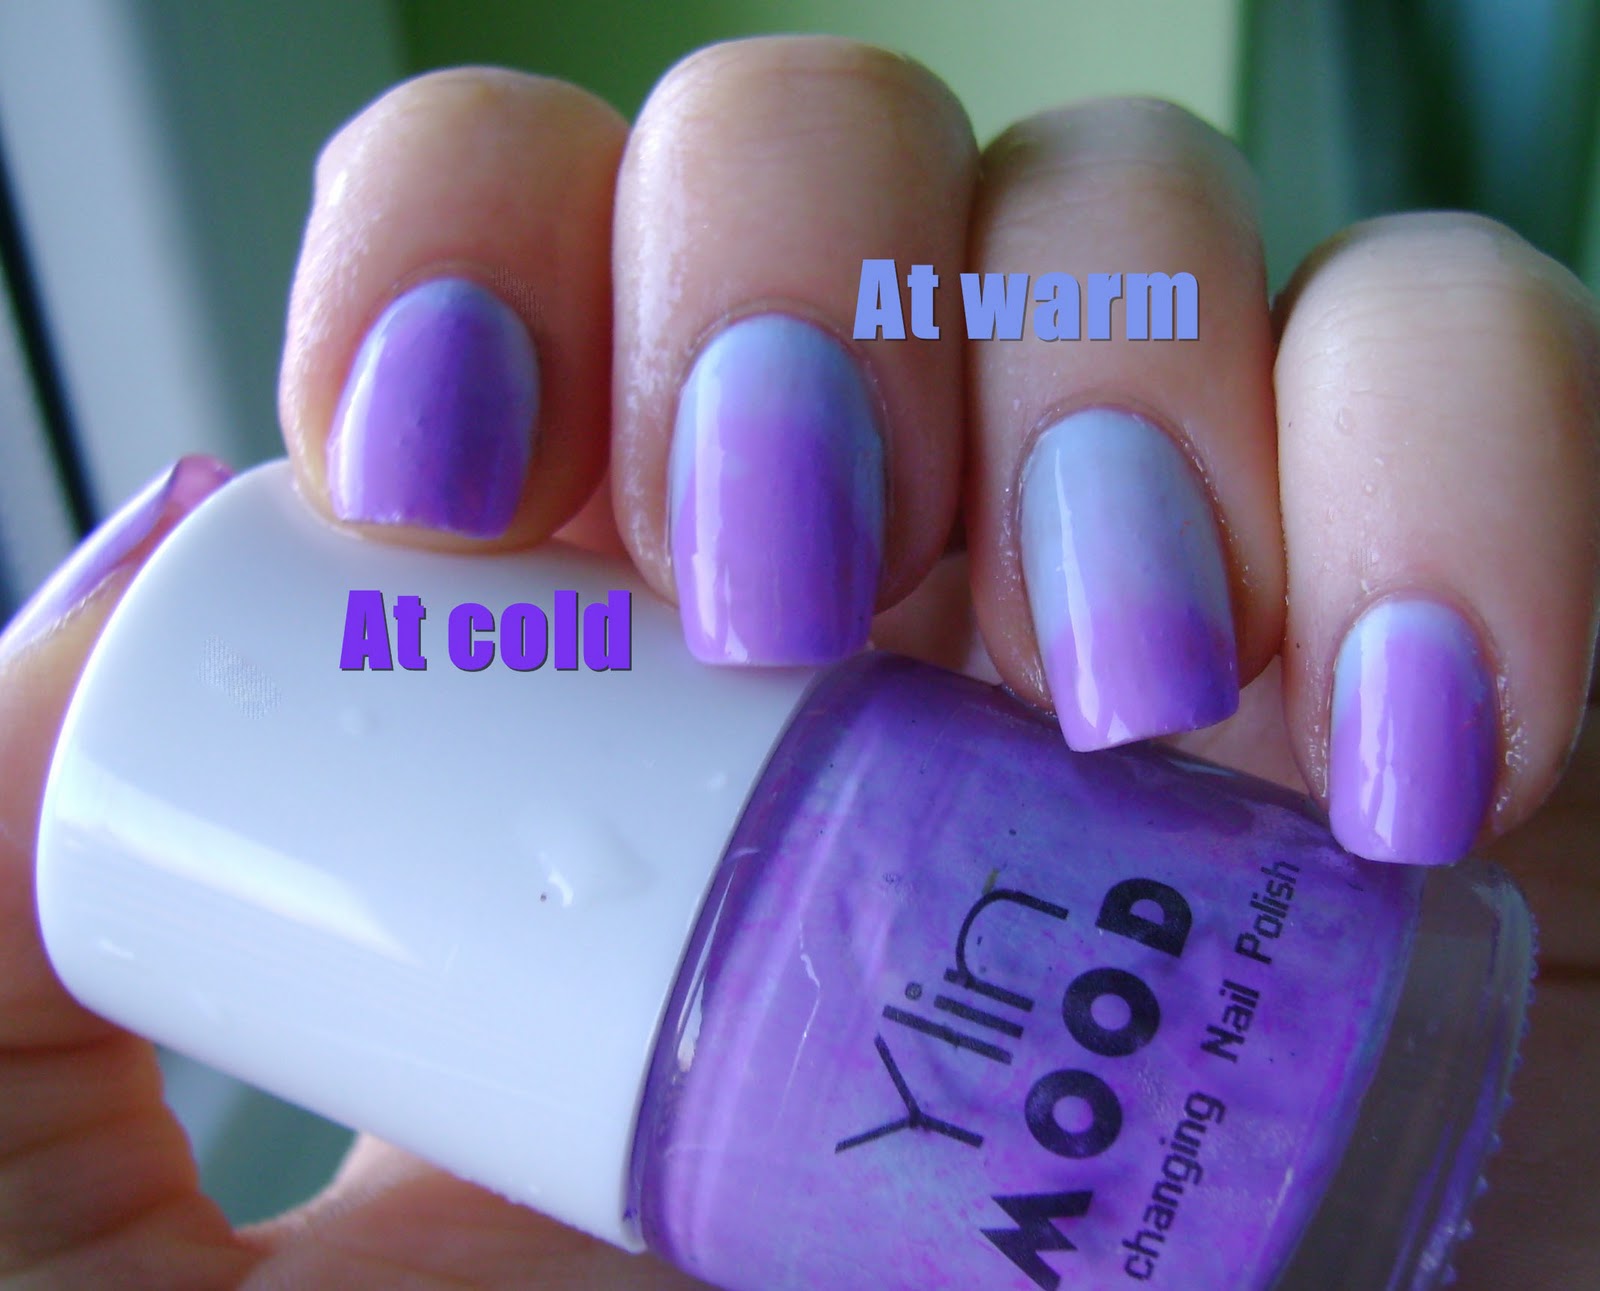 3. OPI Color Changing Nail Polish - wide 6